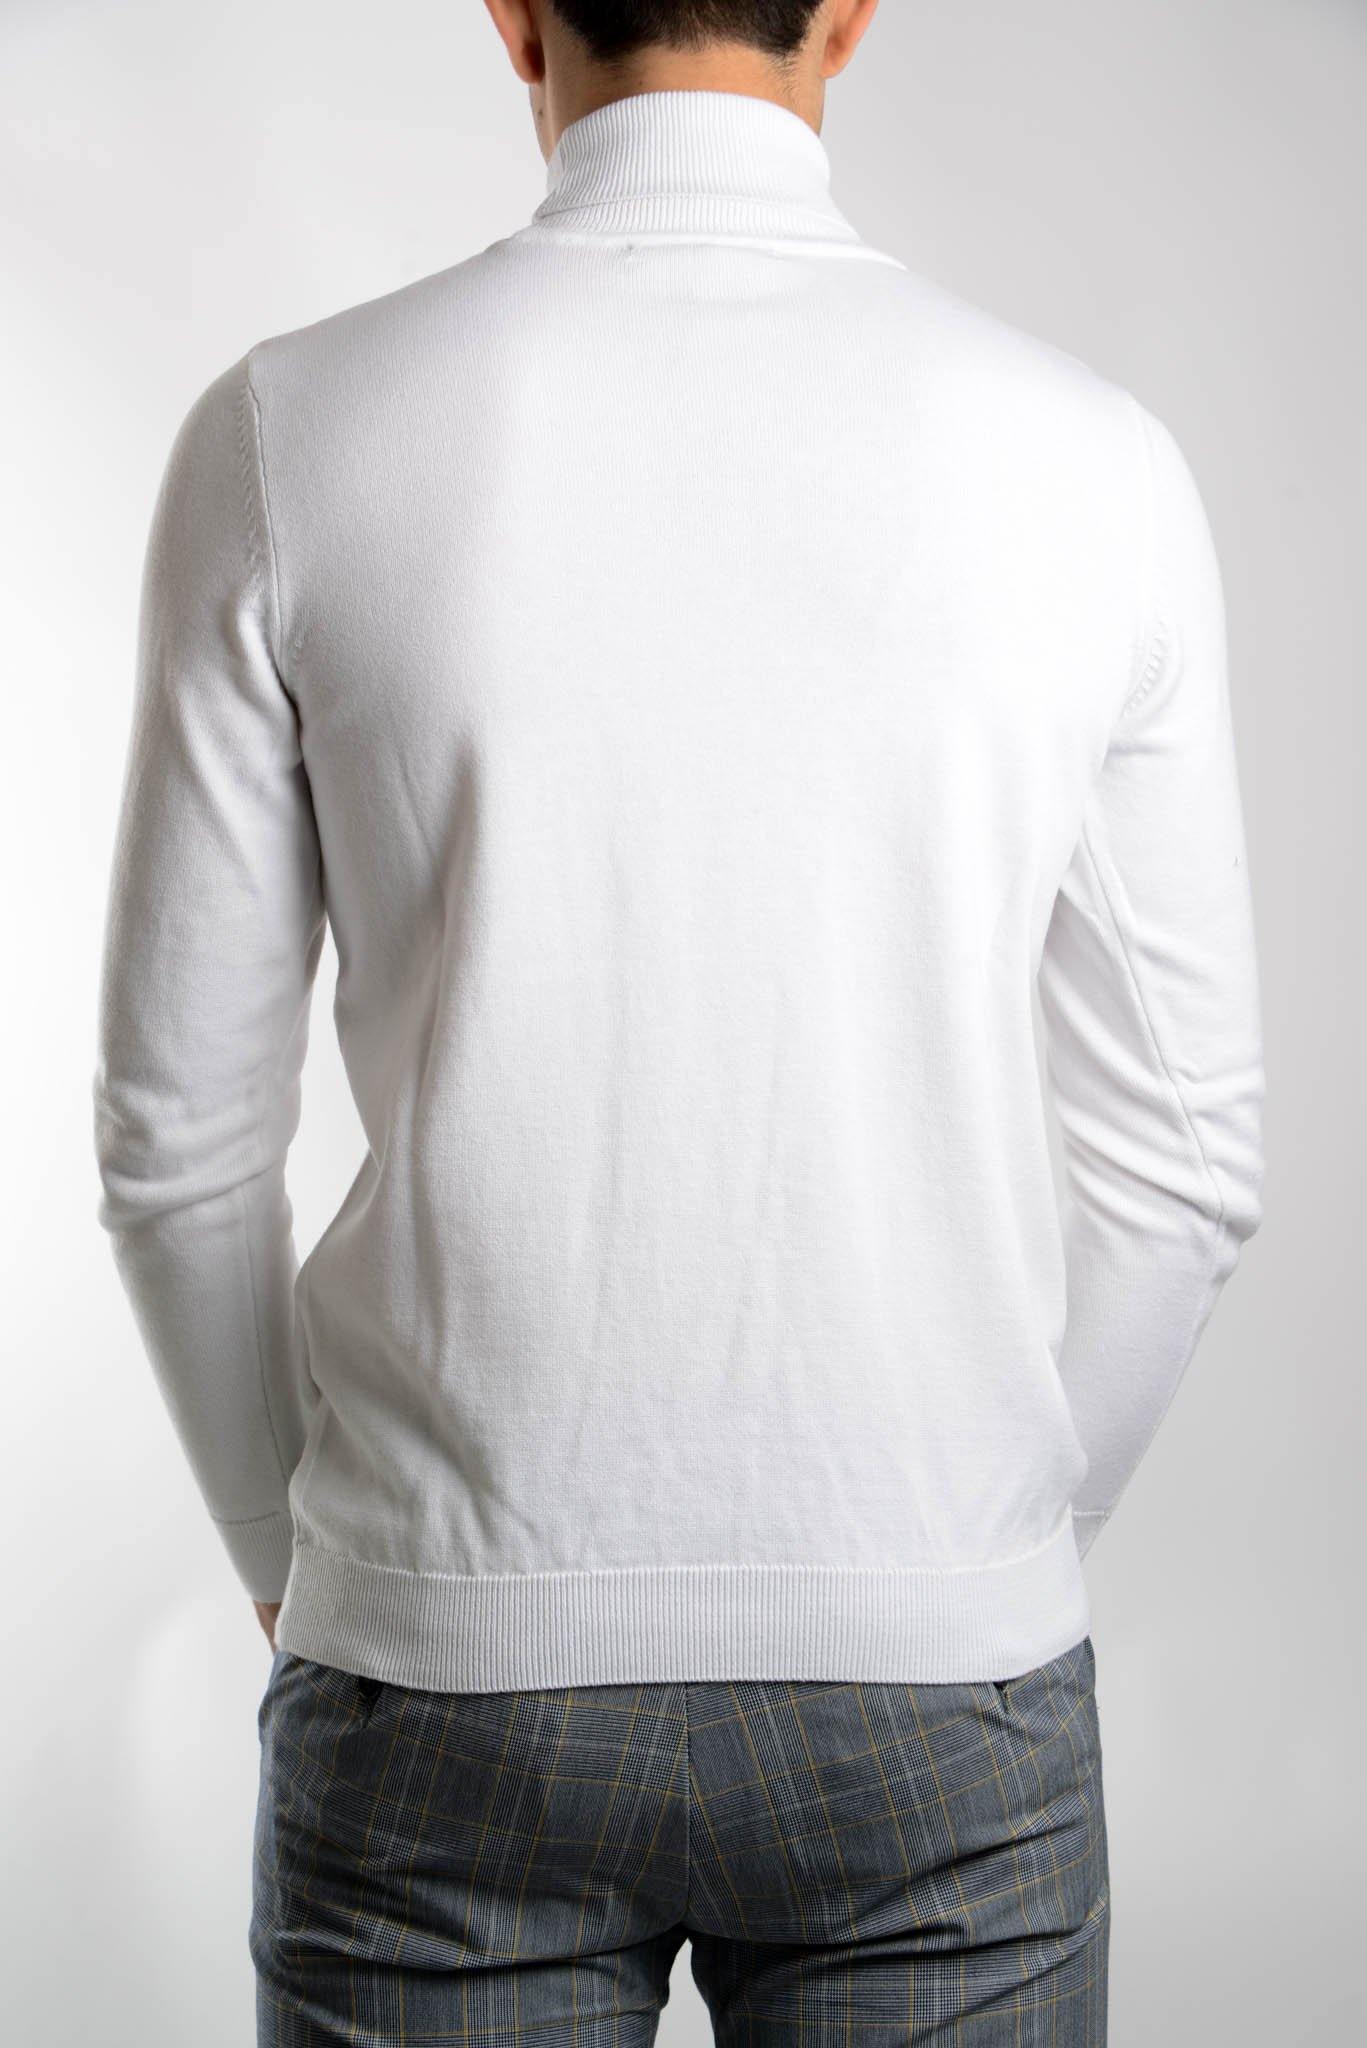 Cambridge Slim Fit Turtleneck Euro Sweater - Haight & Ashbury